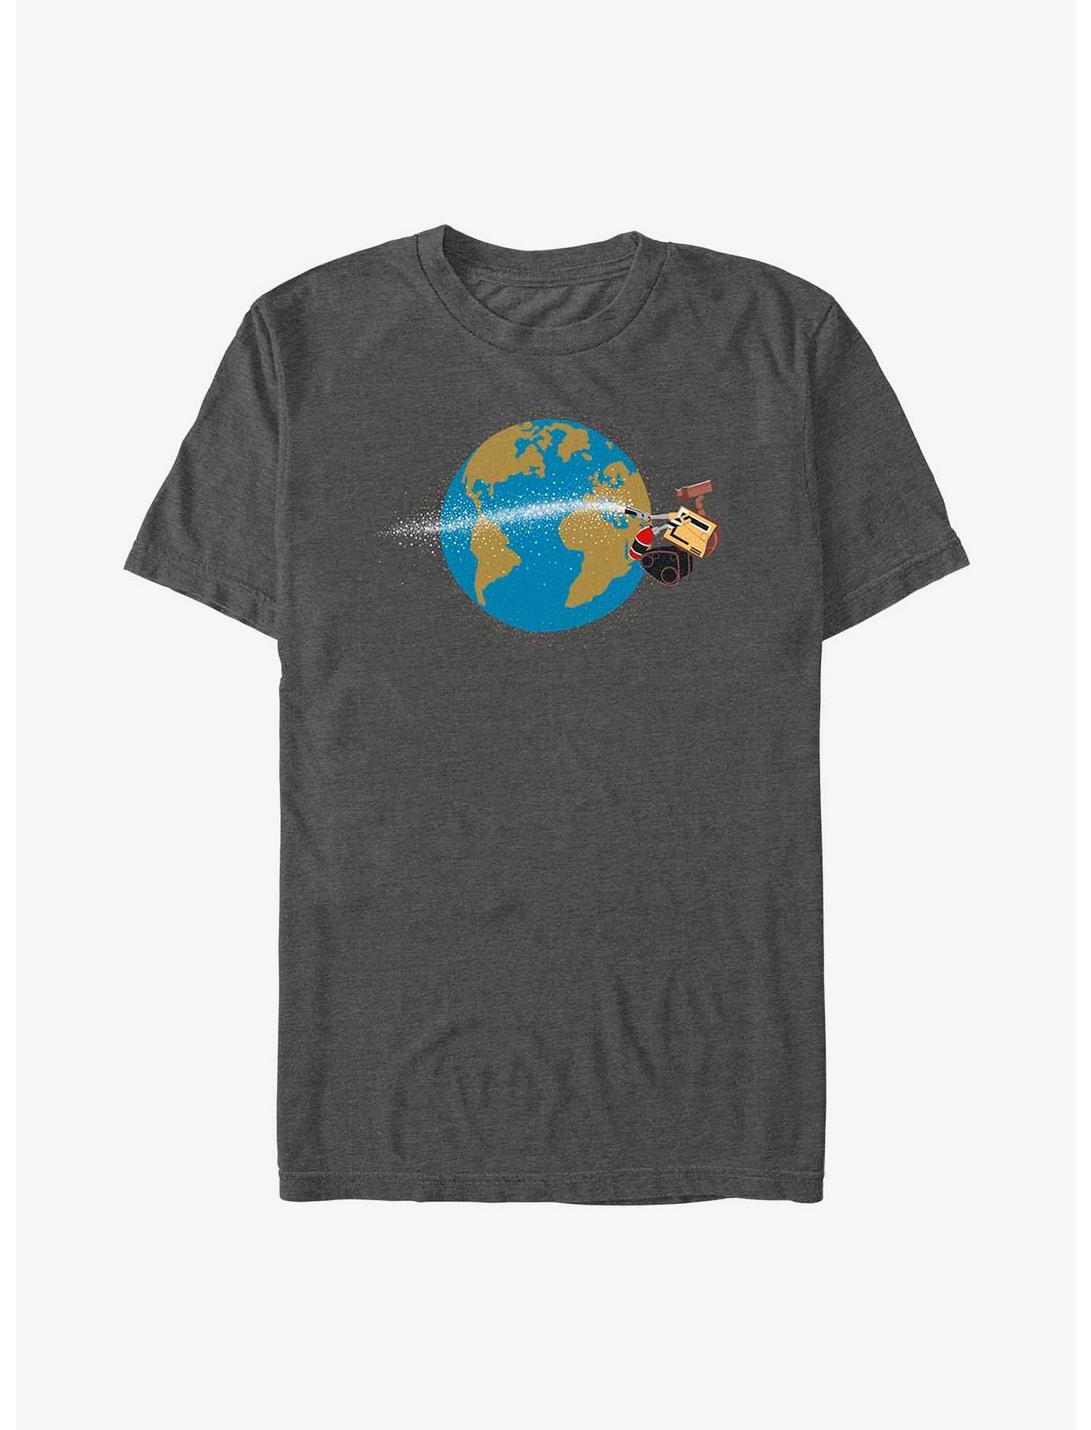 Disney Pixar Wall-E Earth Day Space Extinguisher T-Shirt, CHAR HTR, hi-res